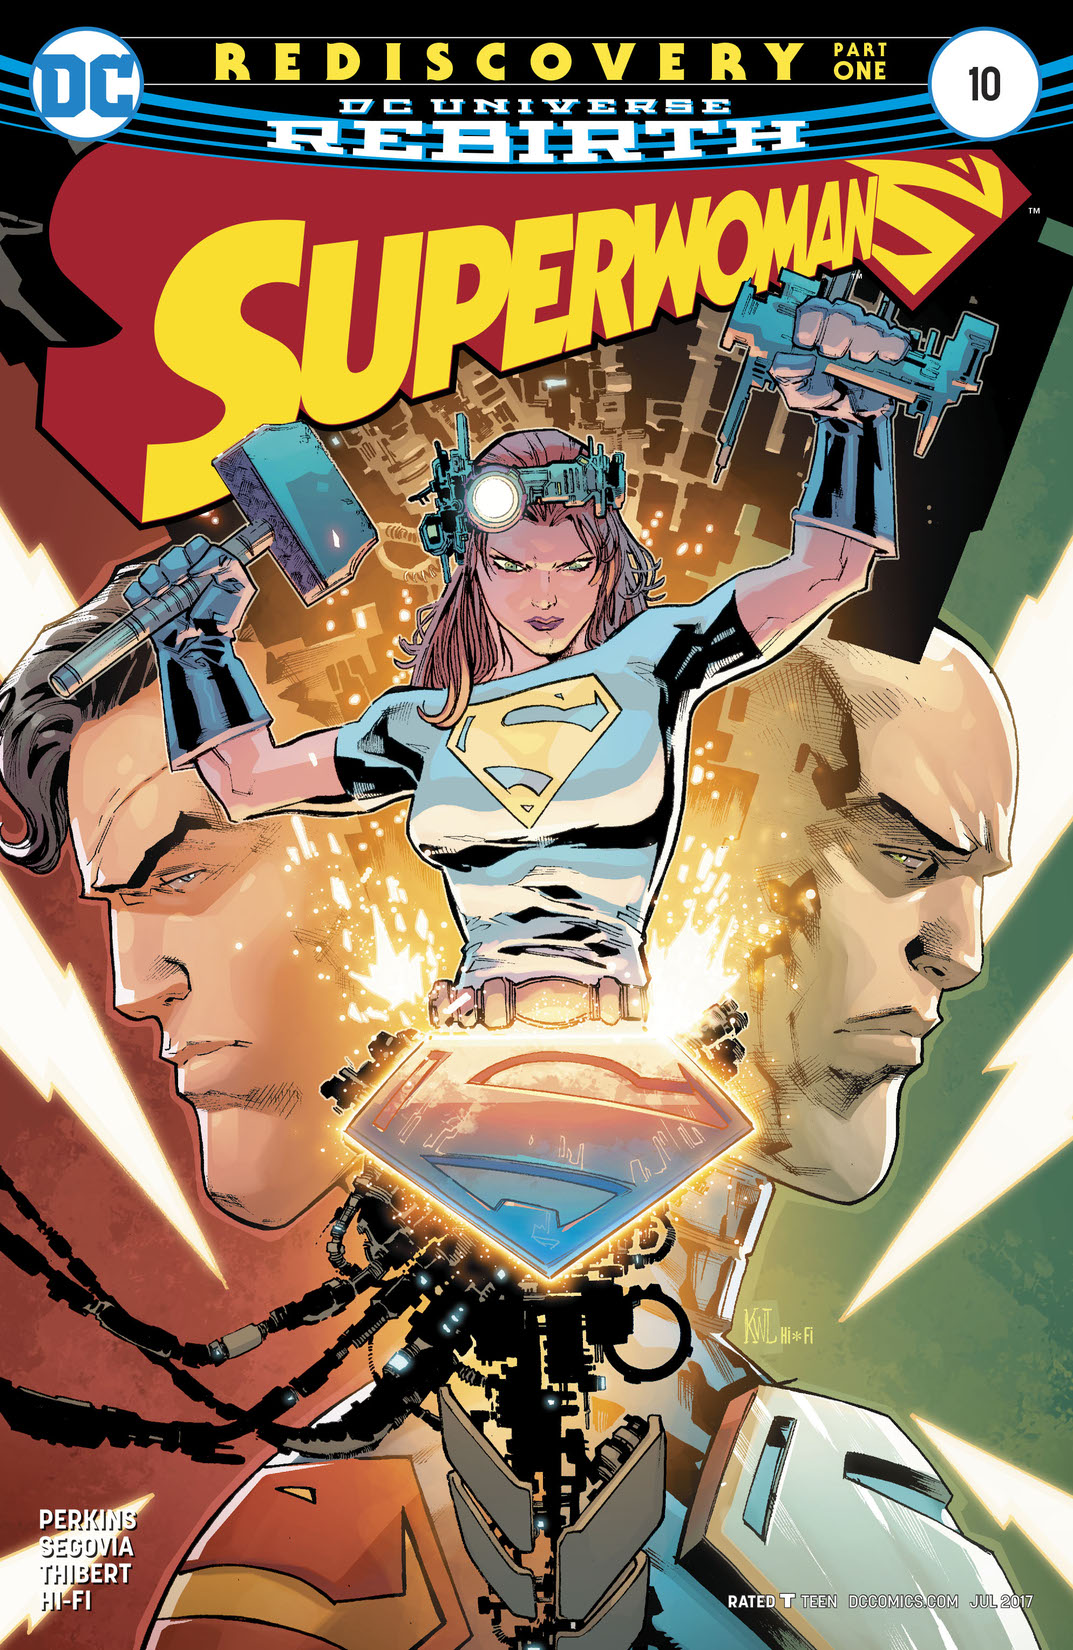 Superwoman #10 preview images